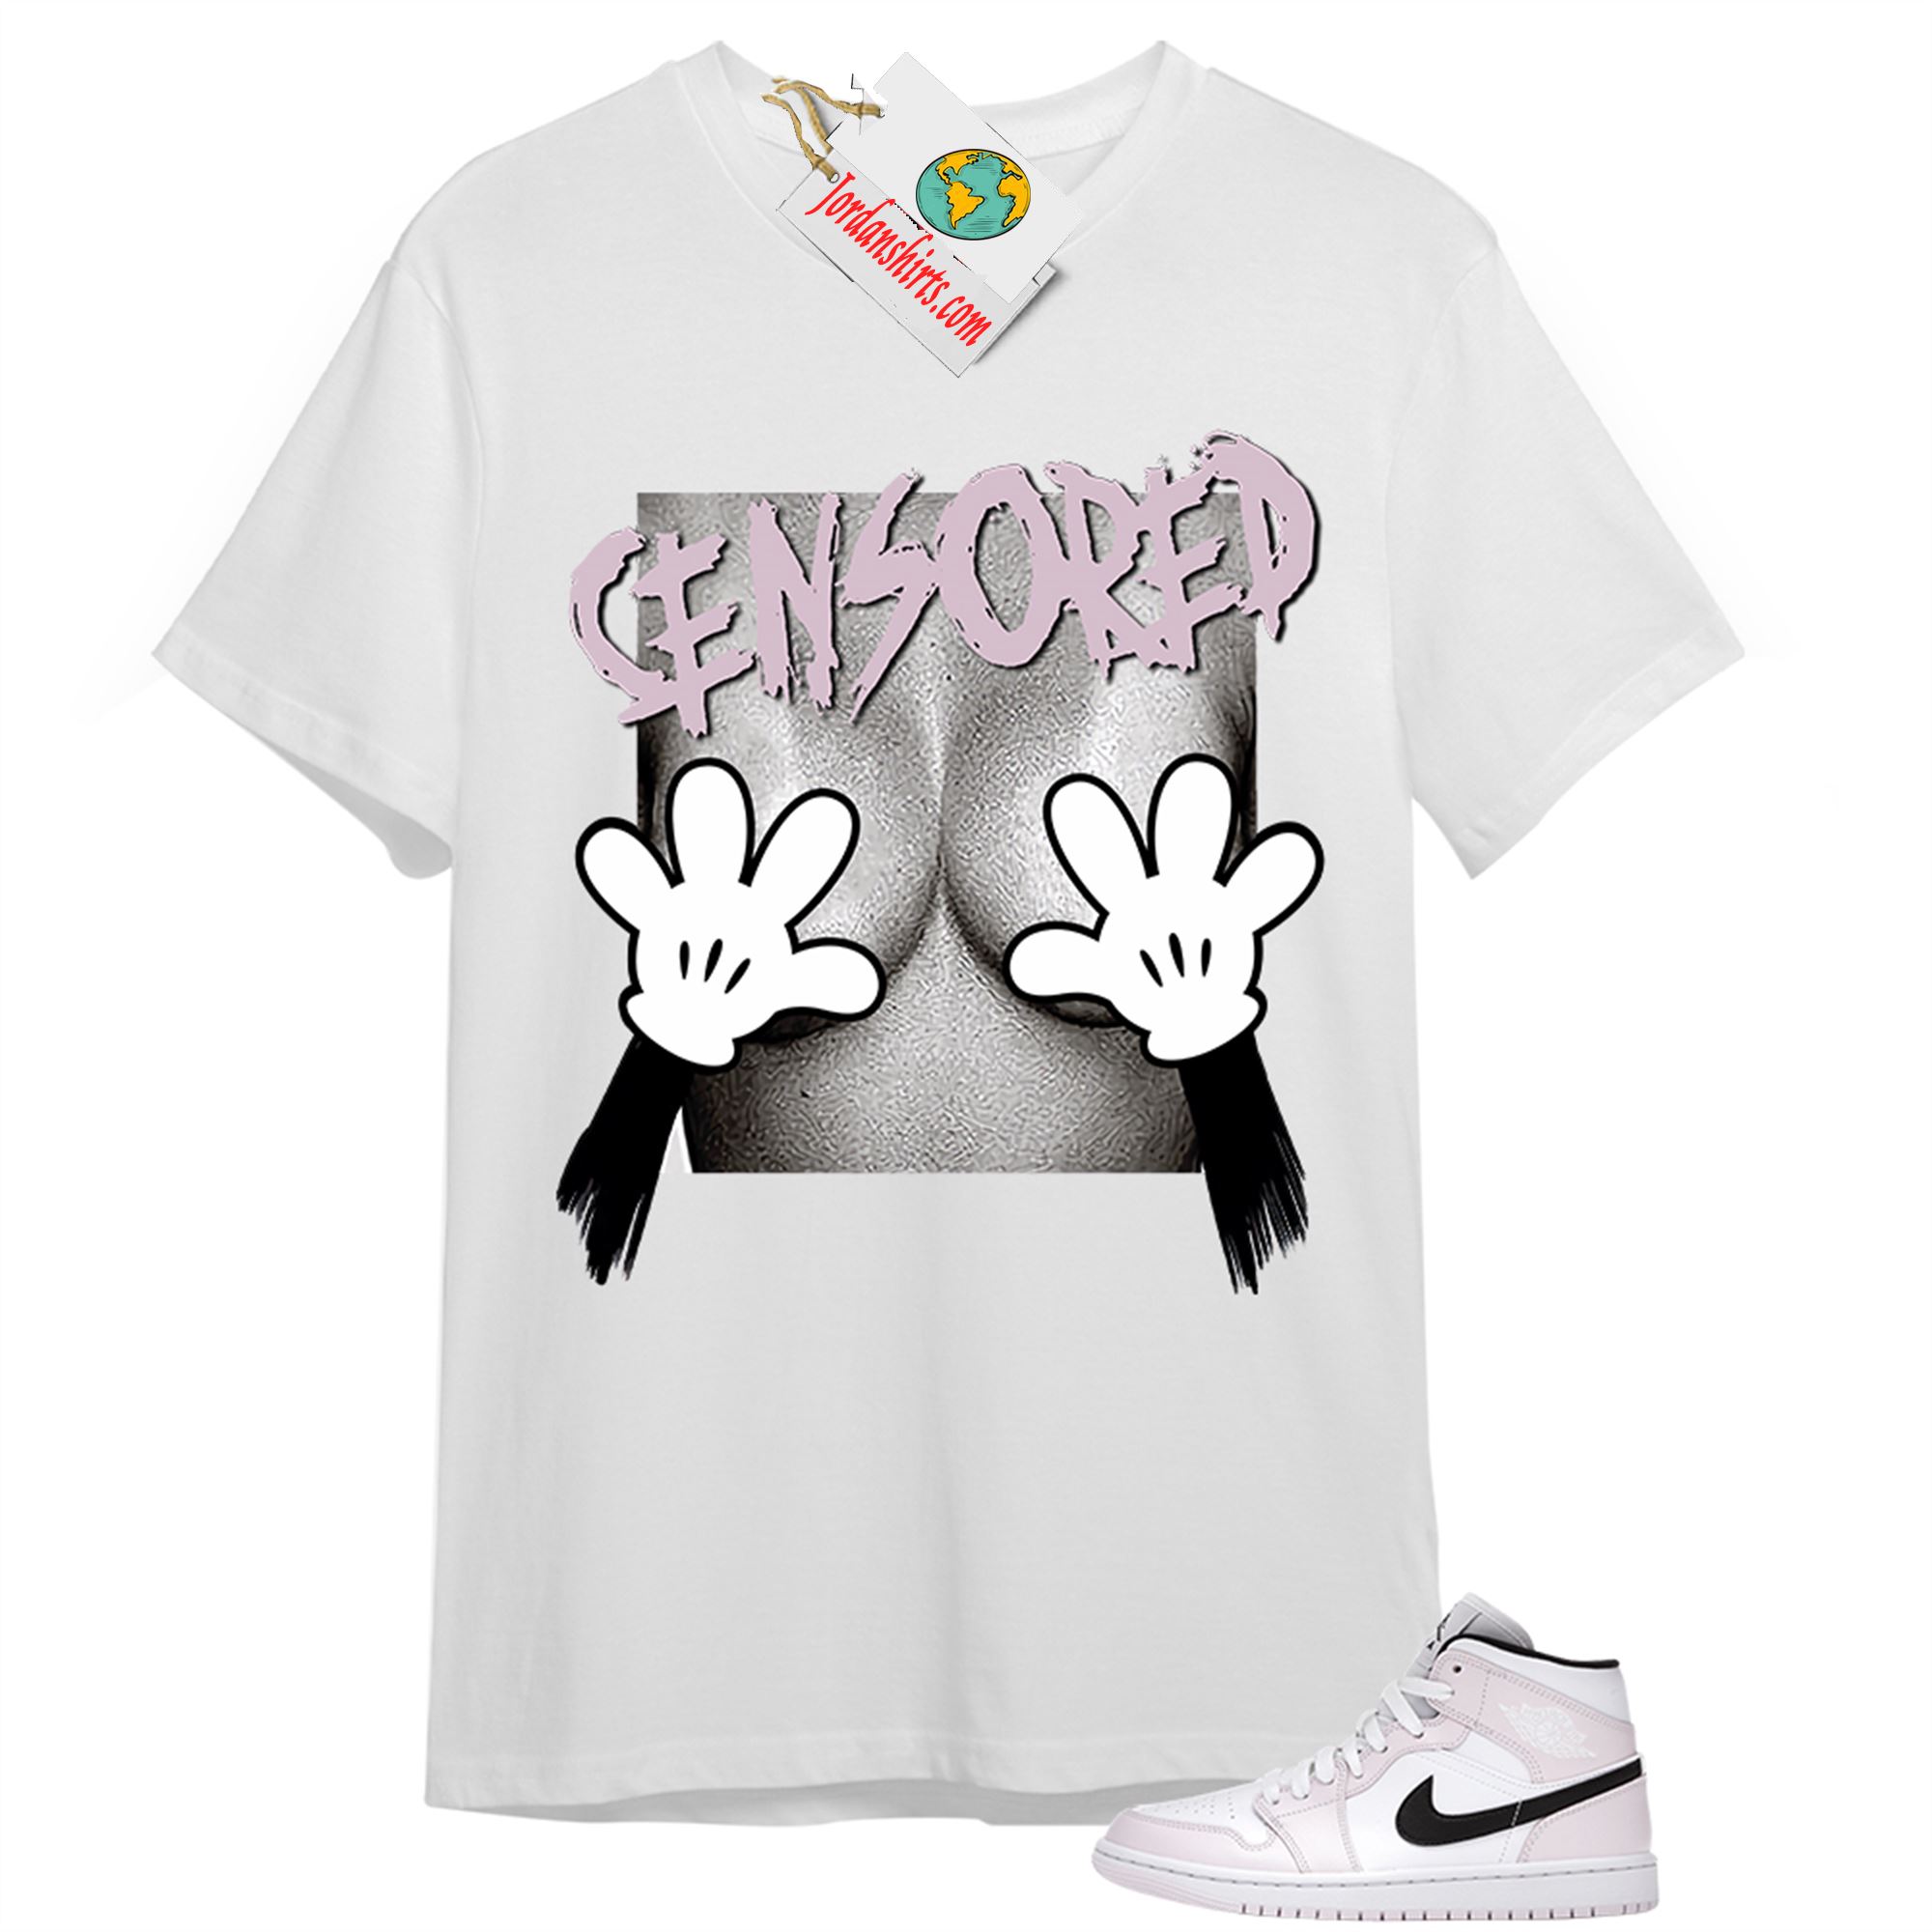 Jordan 1 Shirt, Mickey Boobs Censored White T-shirt Air Jordan 1 Barely Rose 1s Size Up To 5xl